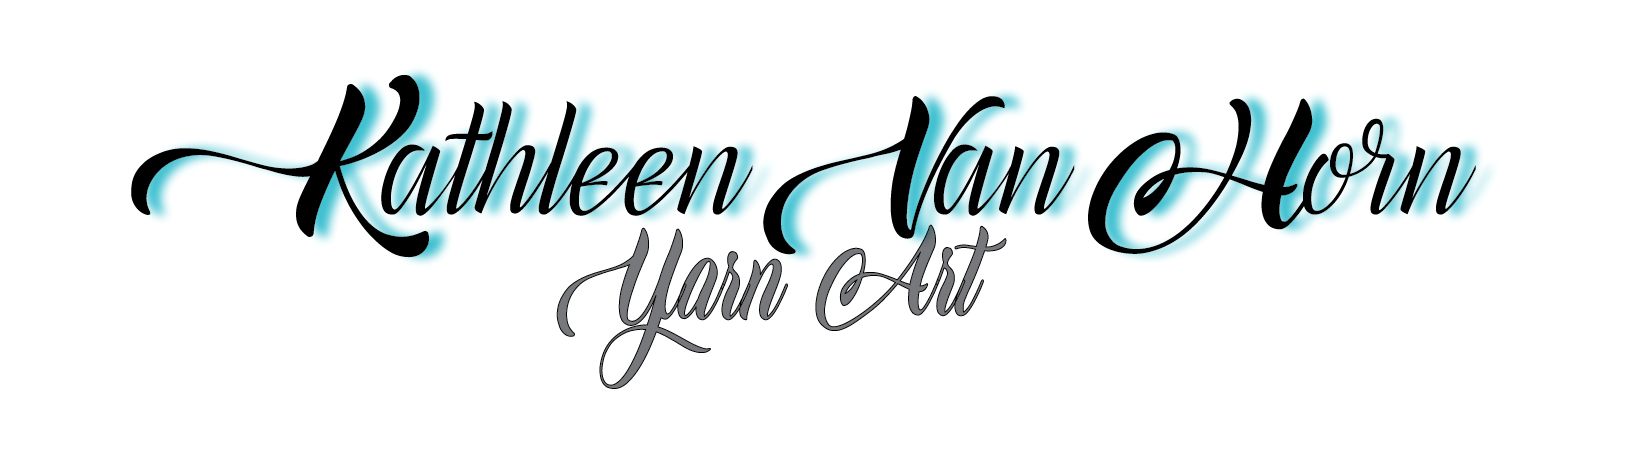 Kathleen Van Horn, Yarn Artist